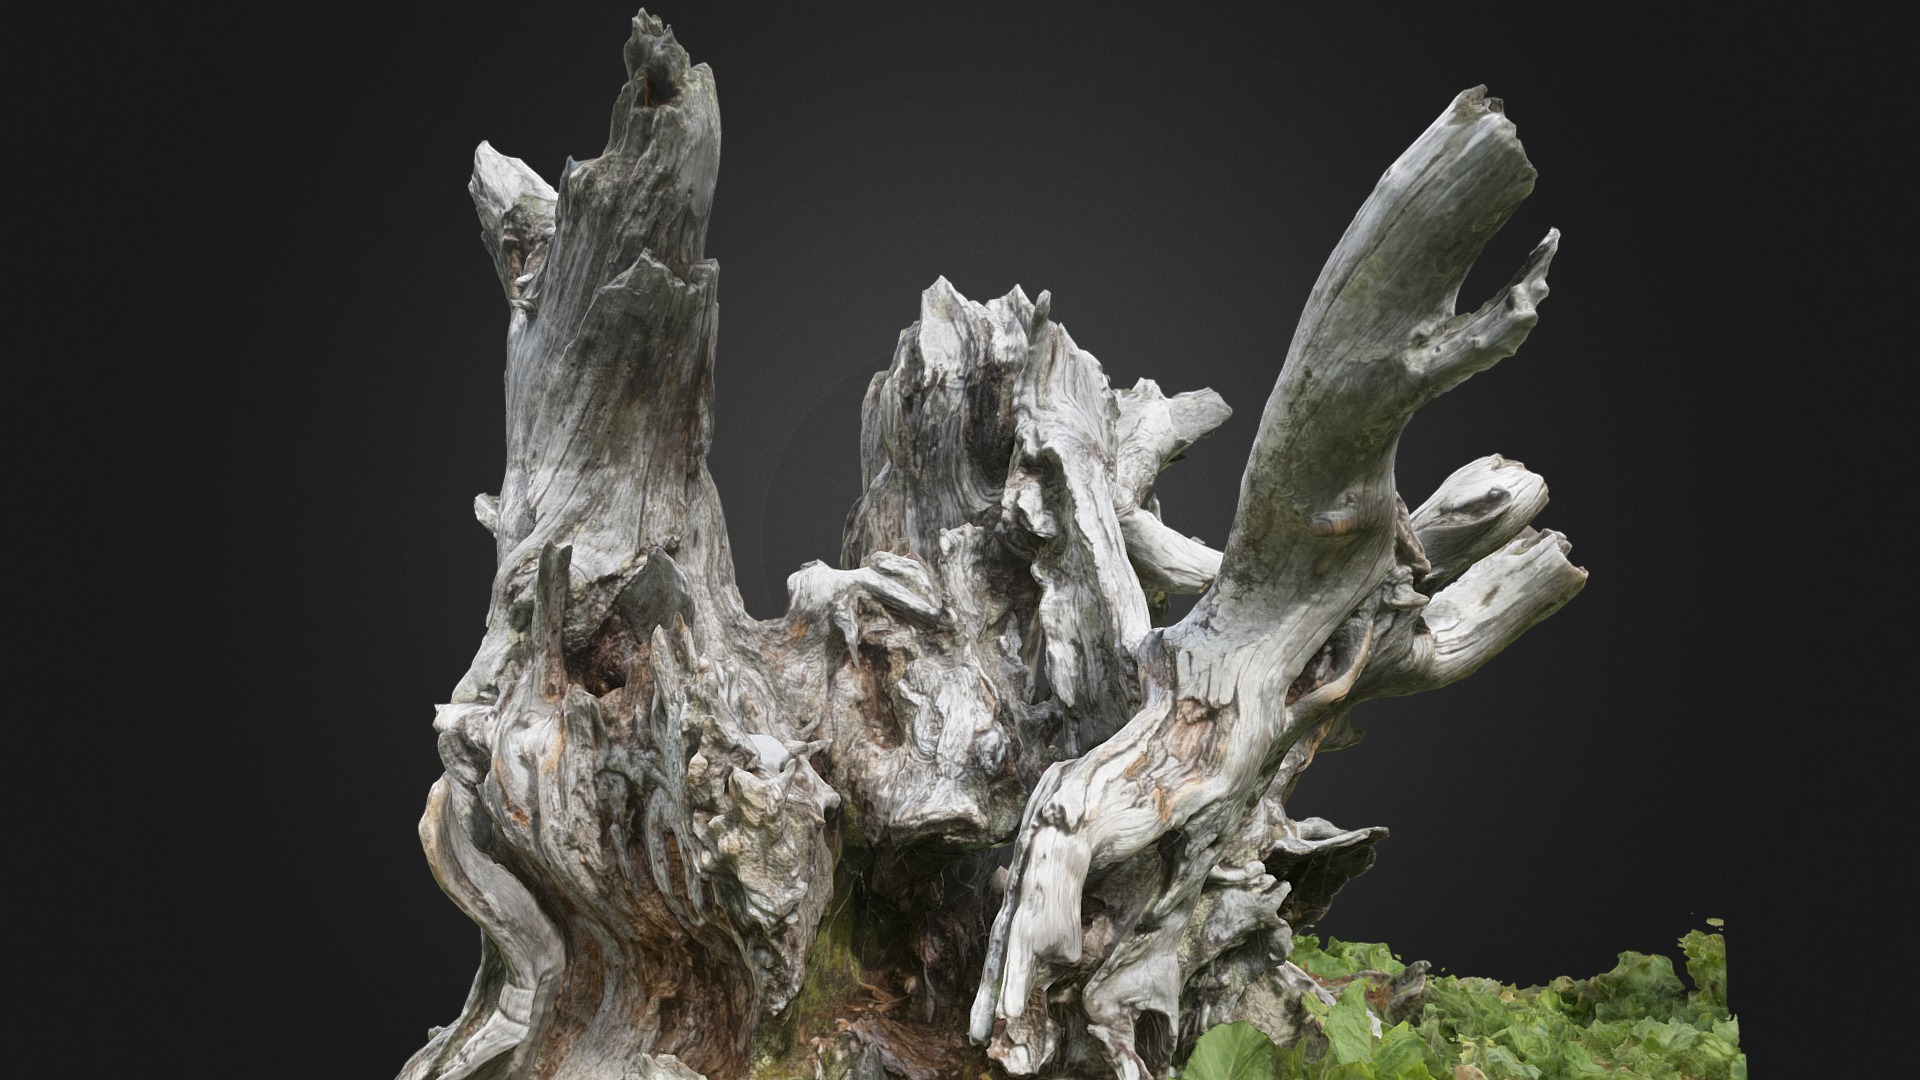 3D model Arbre mort, parc naturel régional Gruyère,Suisse - This is a 3D model of the Arbre mort, parc naturel régional Gruyère,Suisse. The 3D model is about a tree trunk with carvings.